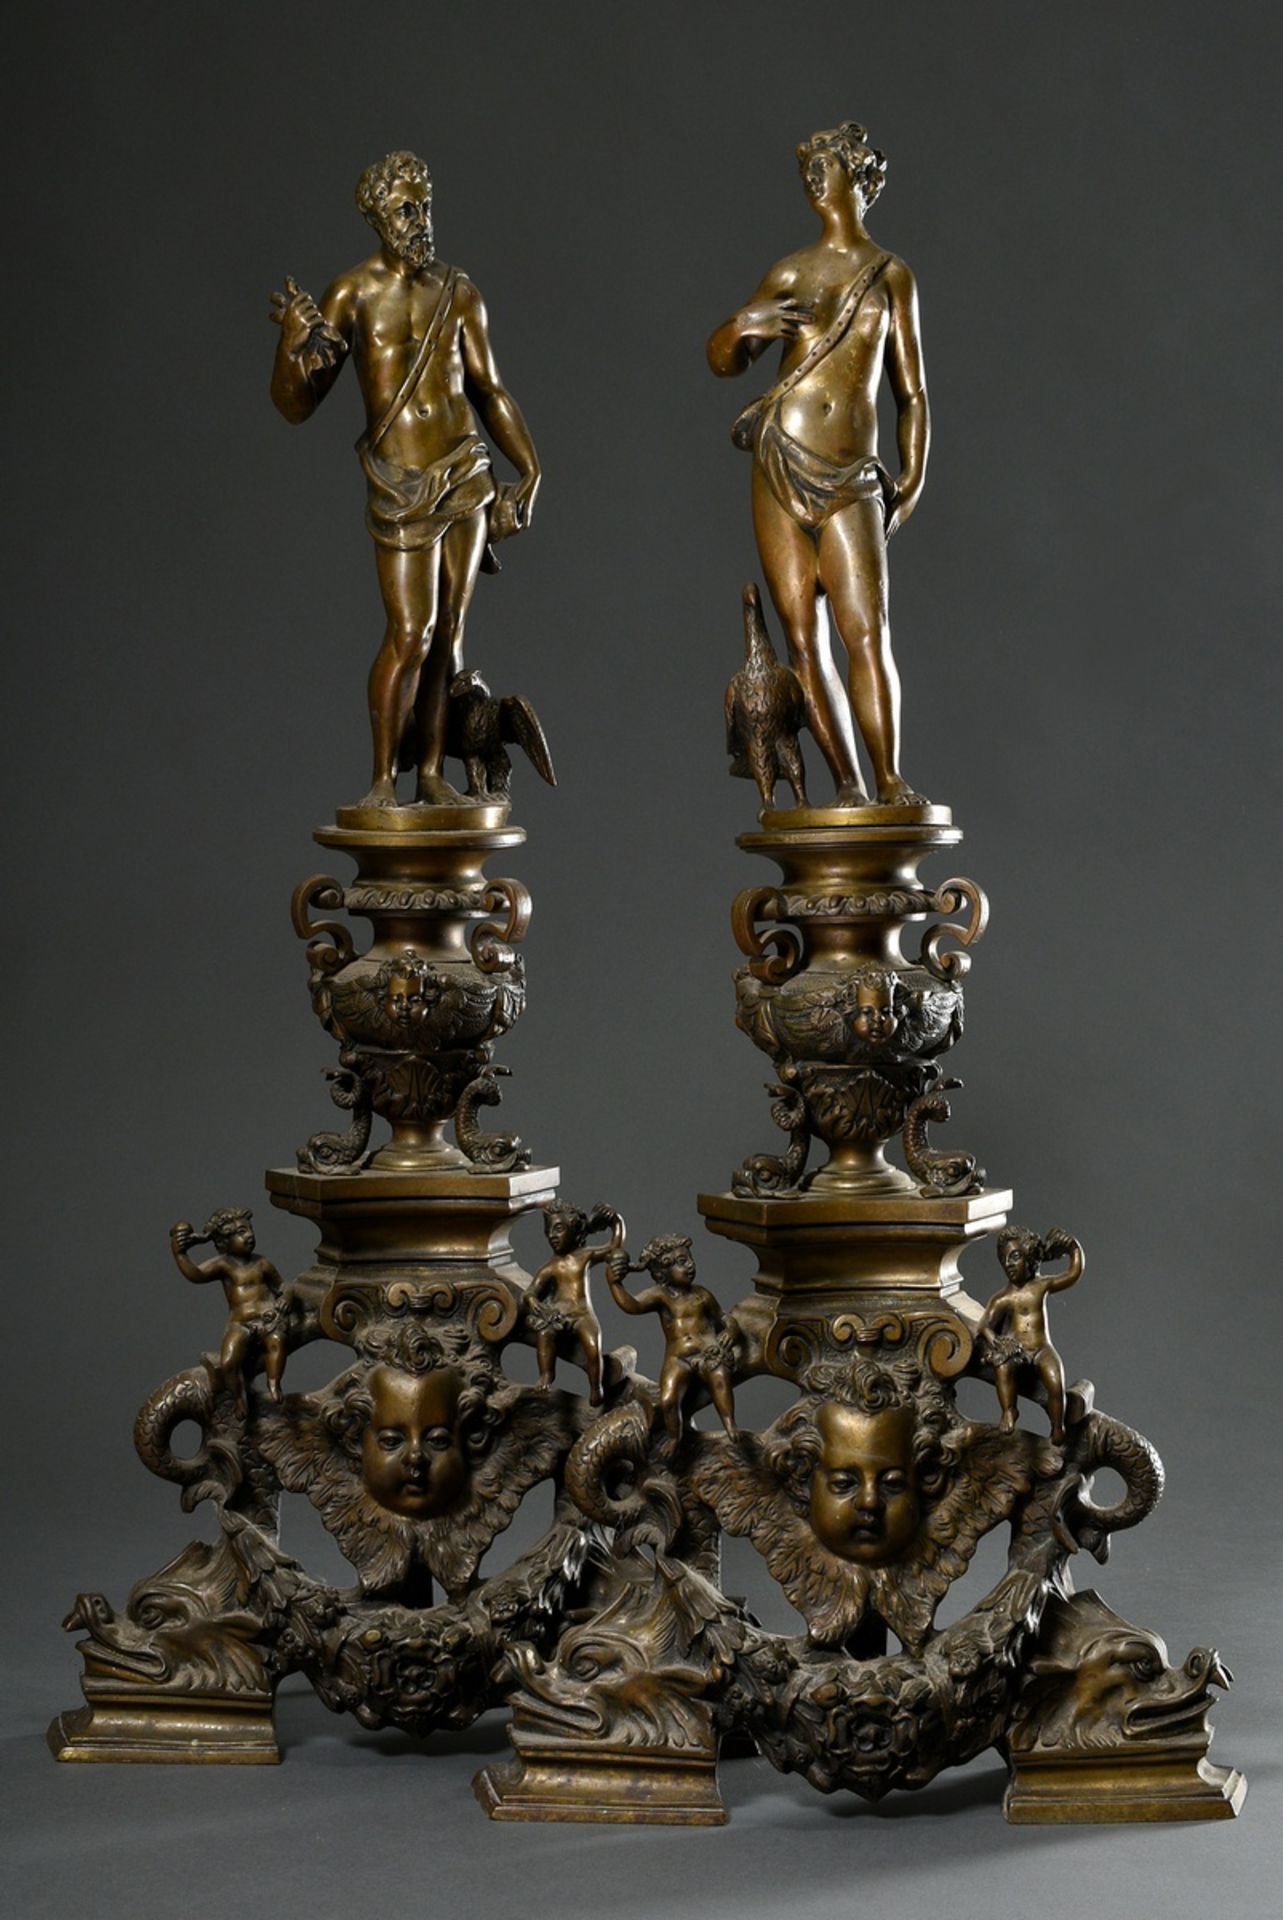 Roccatagliata, Niccolo (1539-1636) and workshop, pair of bronze andirons with figural attachments "